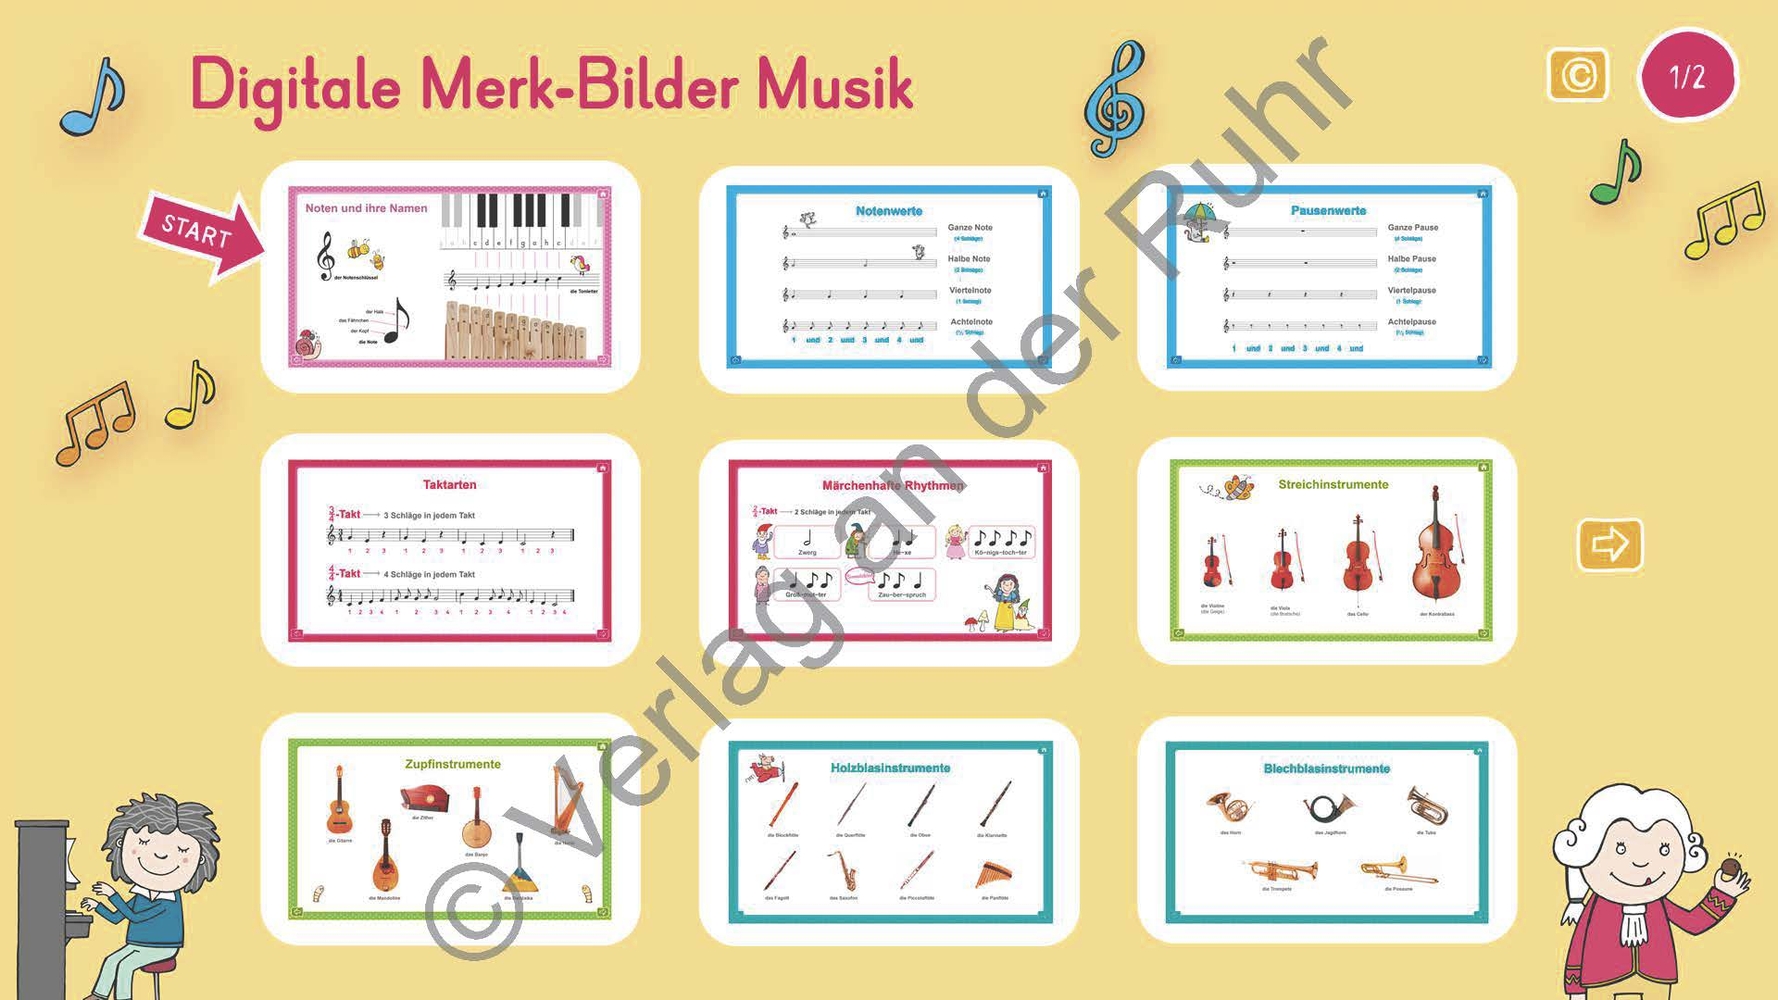 Digitale Merk-Bilder Musik - Premium-Lizenz - Online